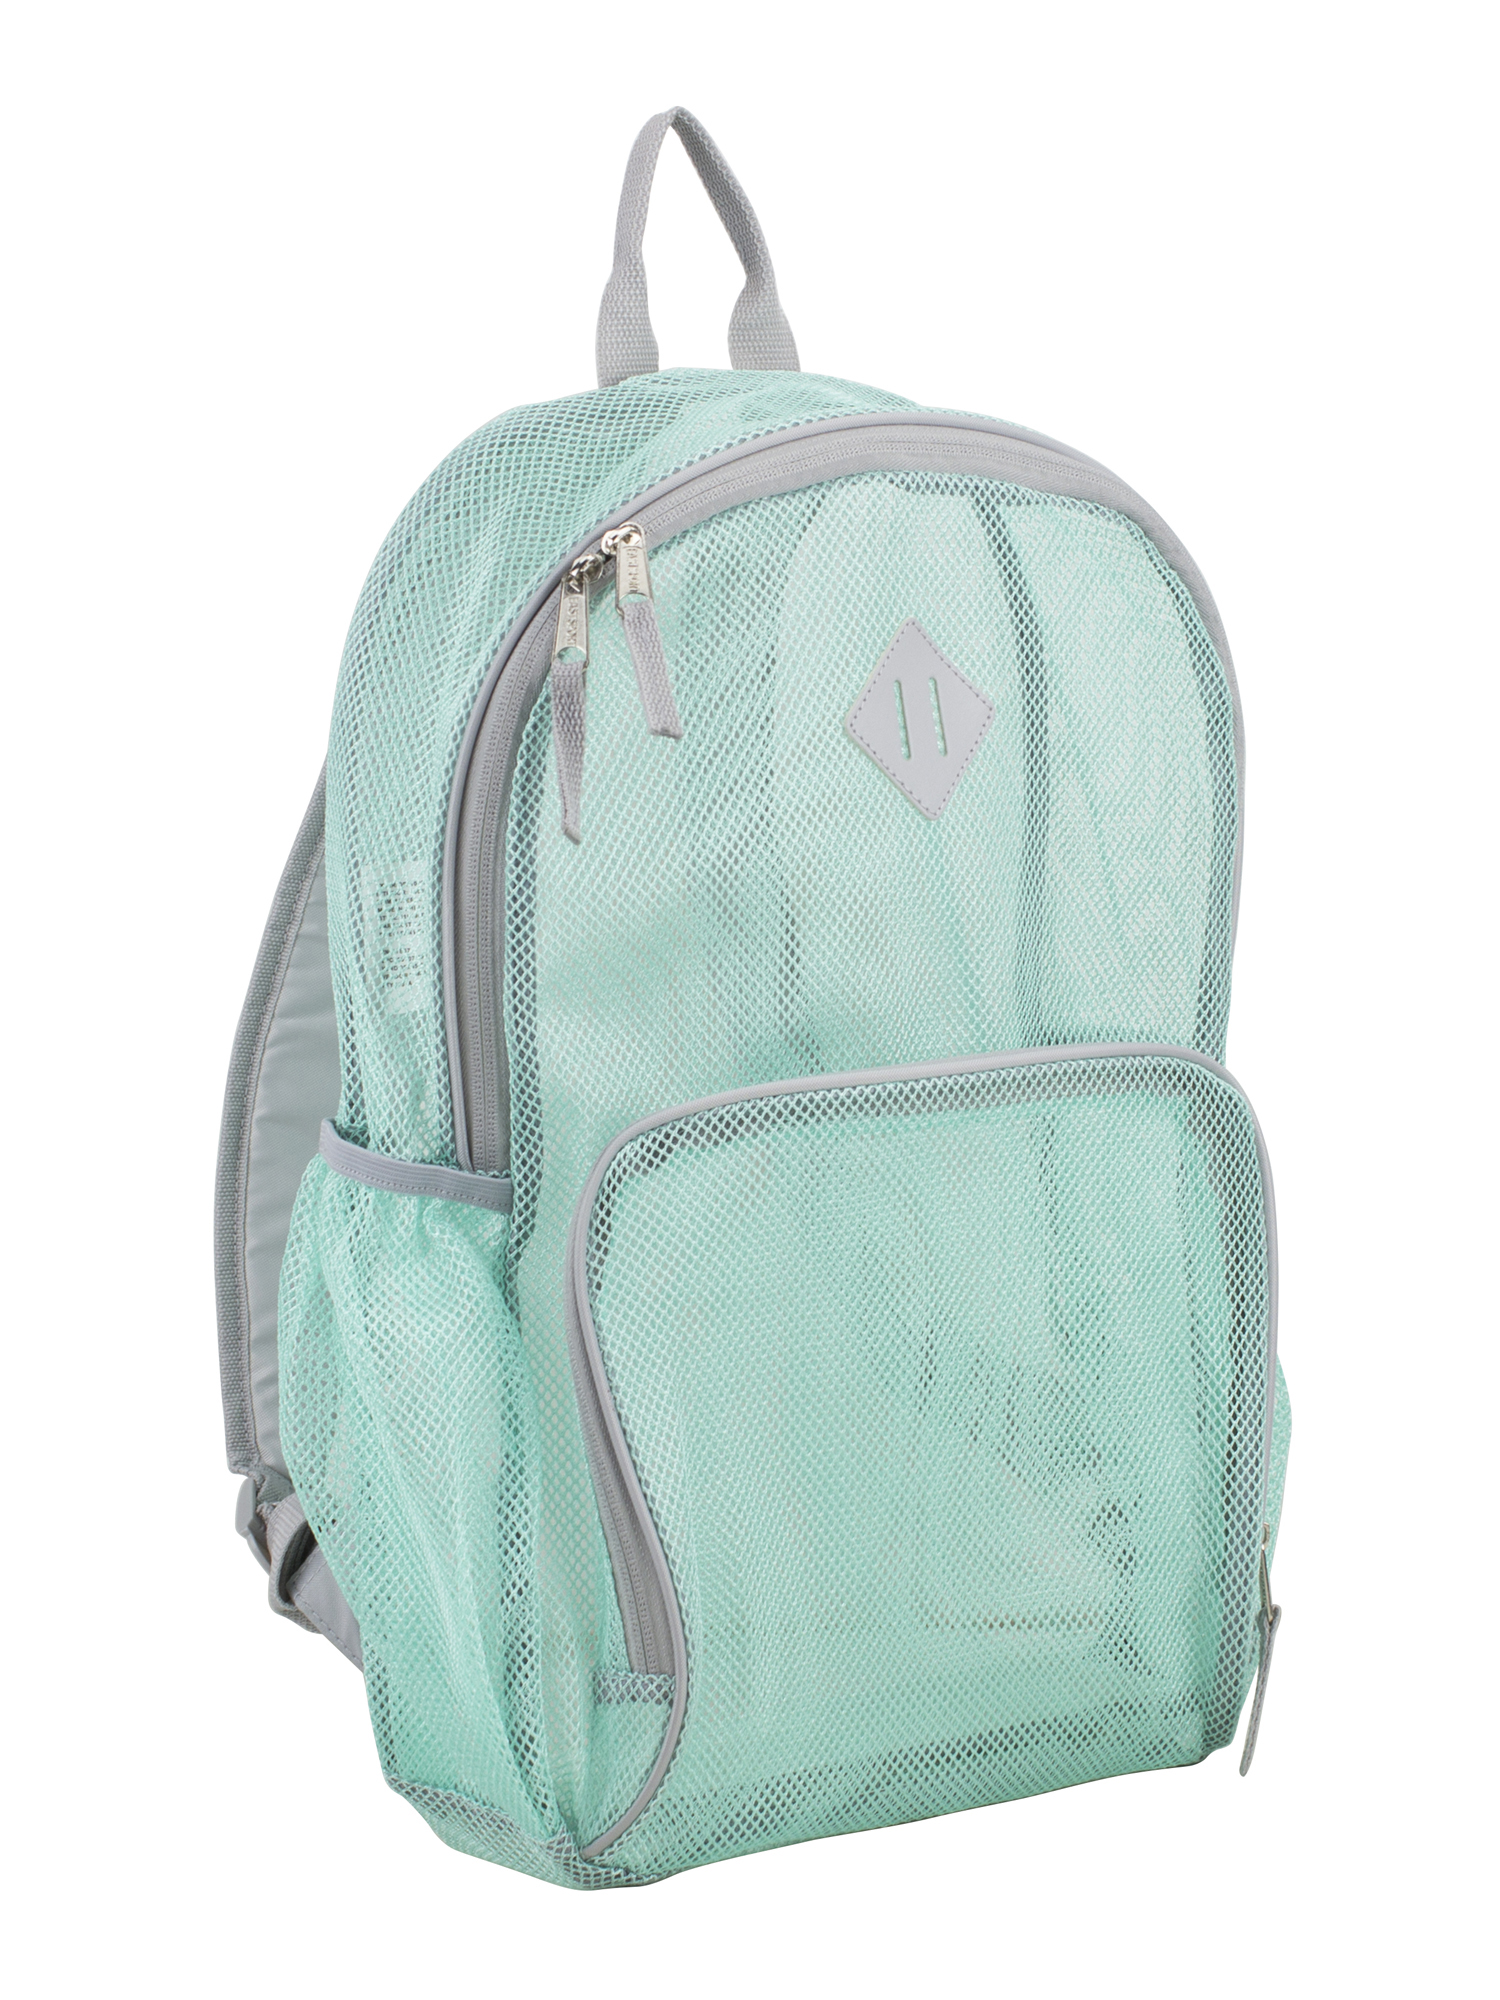 Eastsport Unisex Multi-Purpose Mesh Backpack with Front Pocket Mint - image 1 of 6